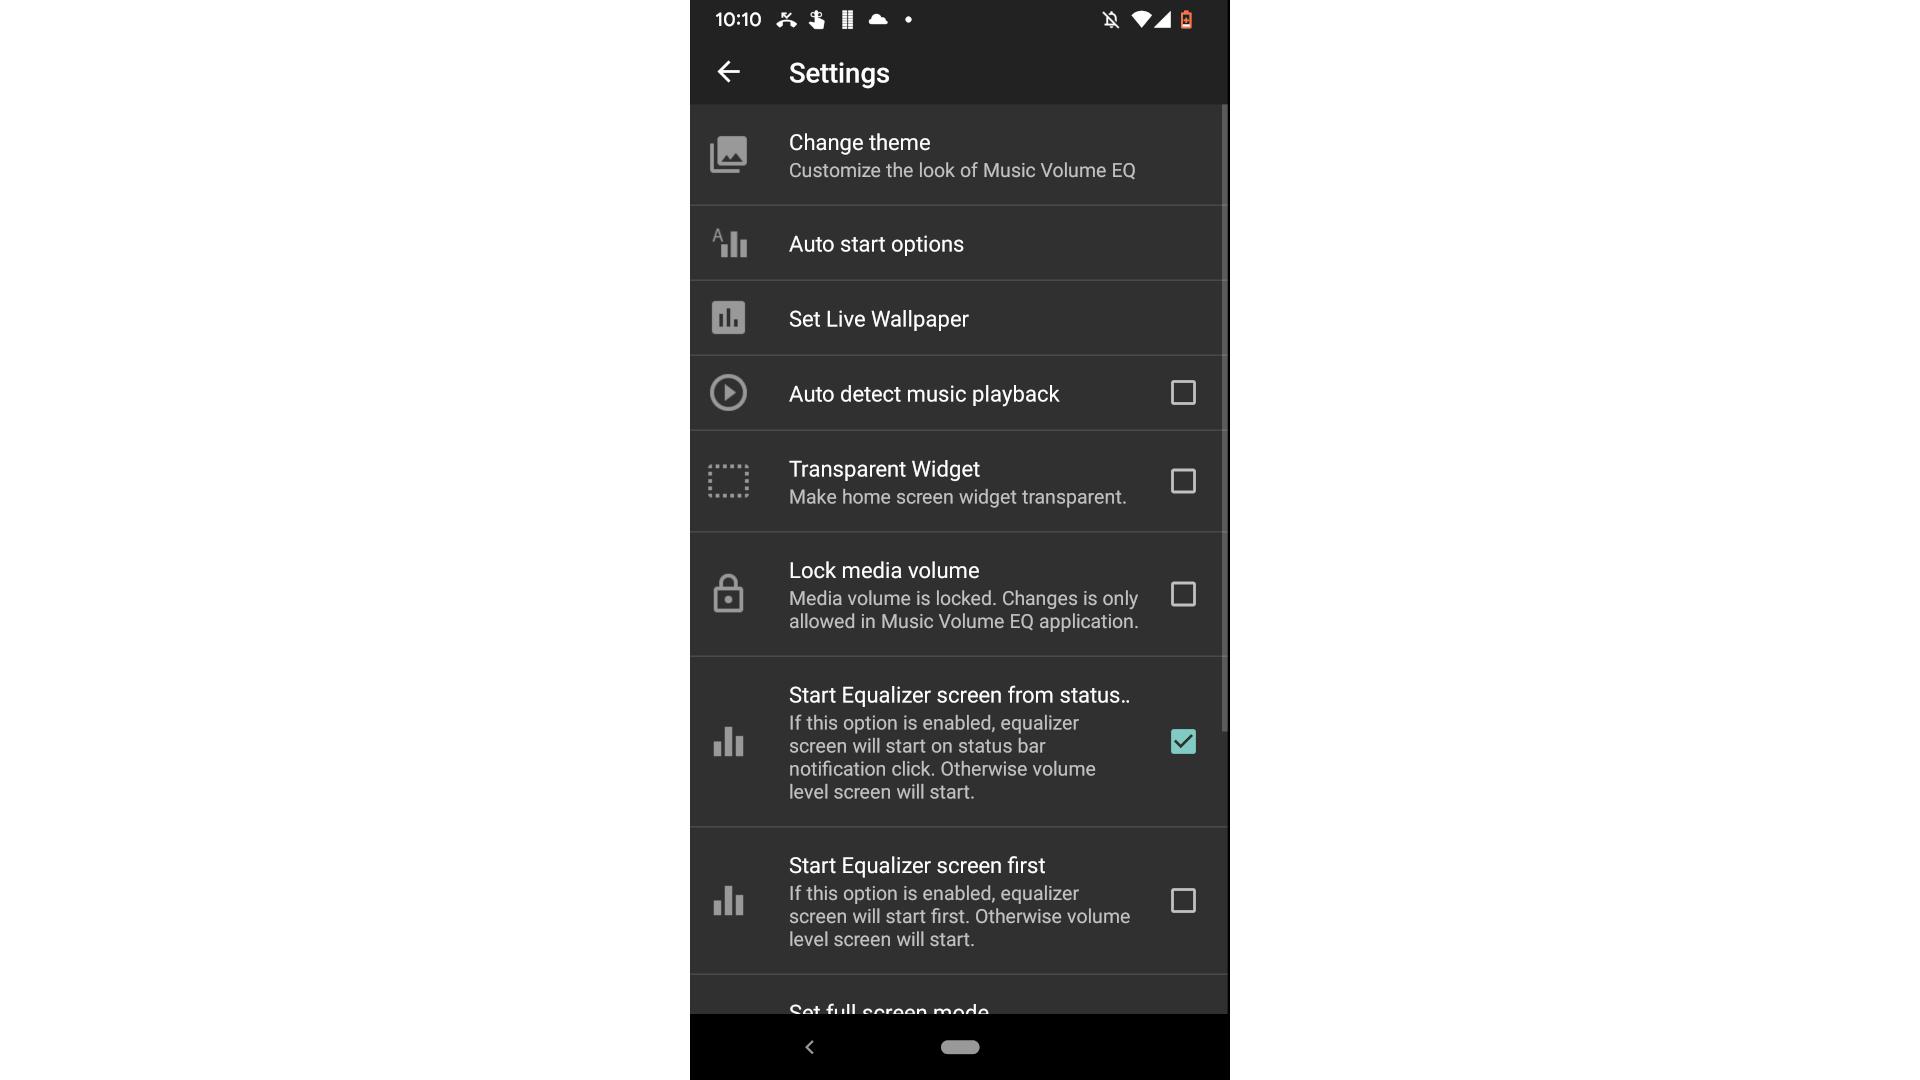 A screenshot of the Music Volume EQ app showing its settings menu.